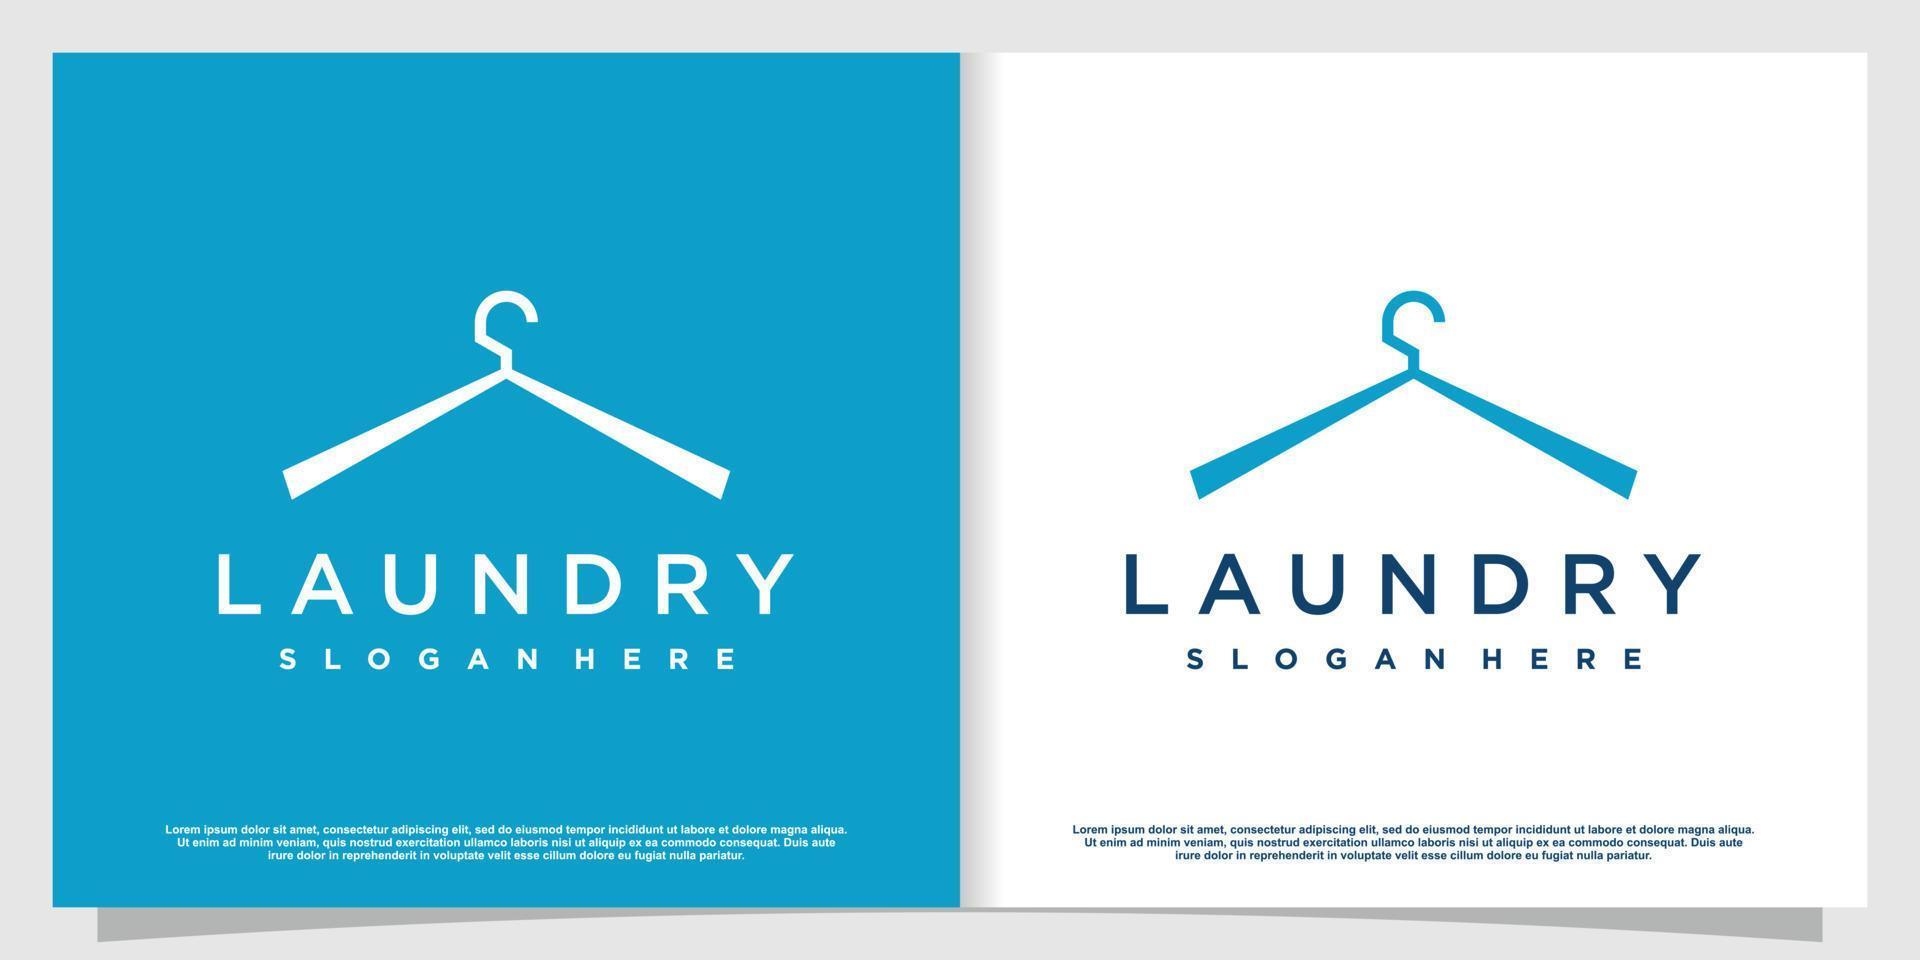 Laundry logo with creative element style Premium Vector part 2